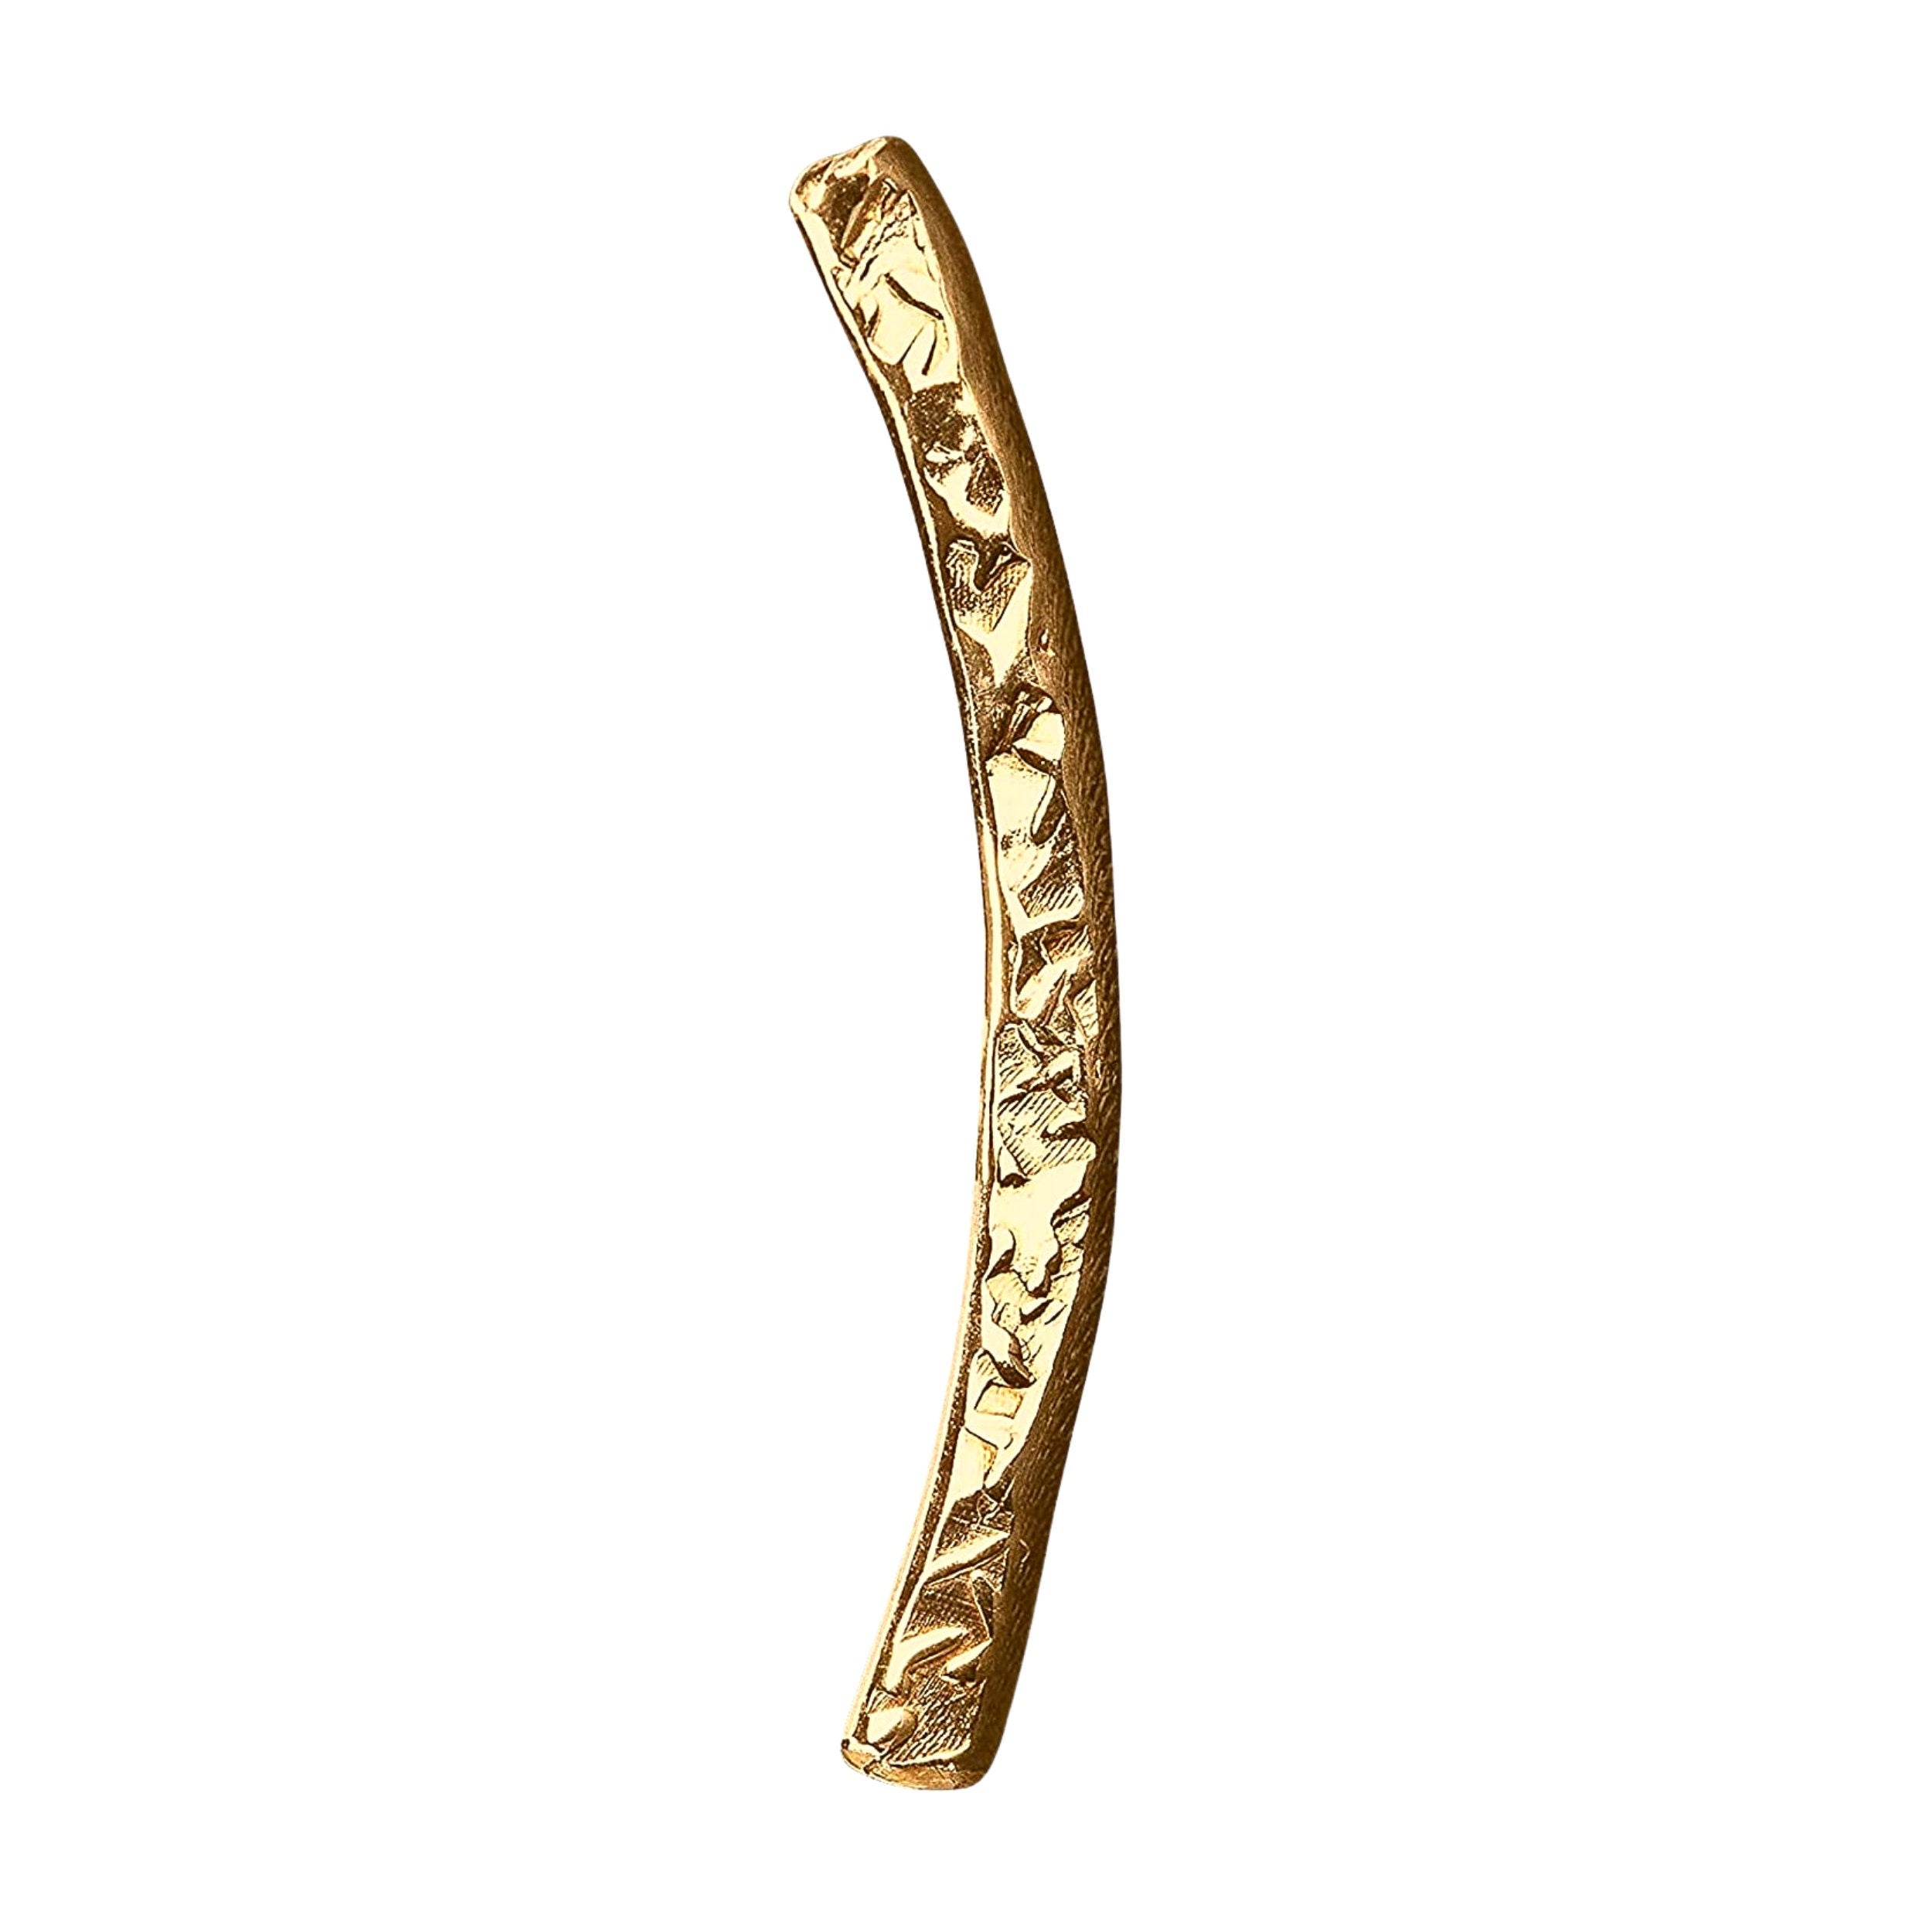 Raw Silk Cartilage Bar Earring | 14K Gold Fill - Melanie Golden Jewelry - _badge_bestseller, bestseller, cartilage earrings, earrings, piercings